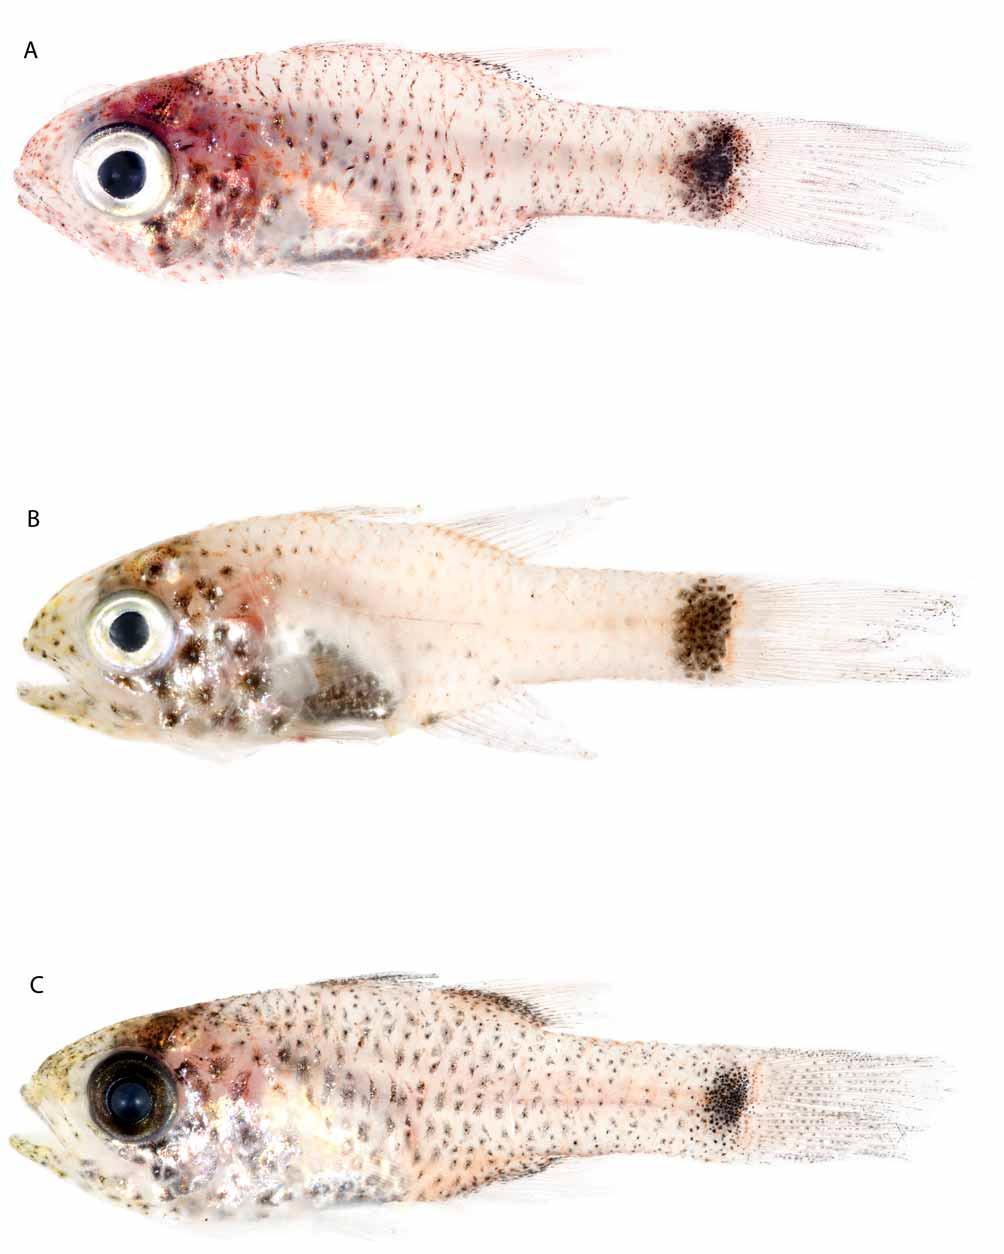 FIGURE 3. Phaeoptyx juveniles: (A) Phaeoptyx conklini, USNM 393373, 22 mm SL, 5144; (B) Phaeoptyx pigmentaria, USNM 393352, 19 mm SL, 6371; (C) Phaeoptyx xenus, USNM 393399, 21 mm SL, 7741.